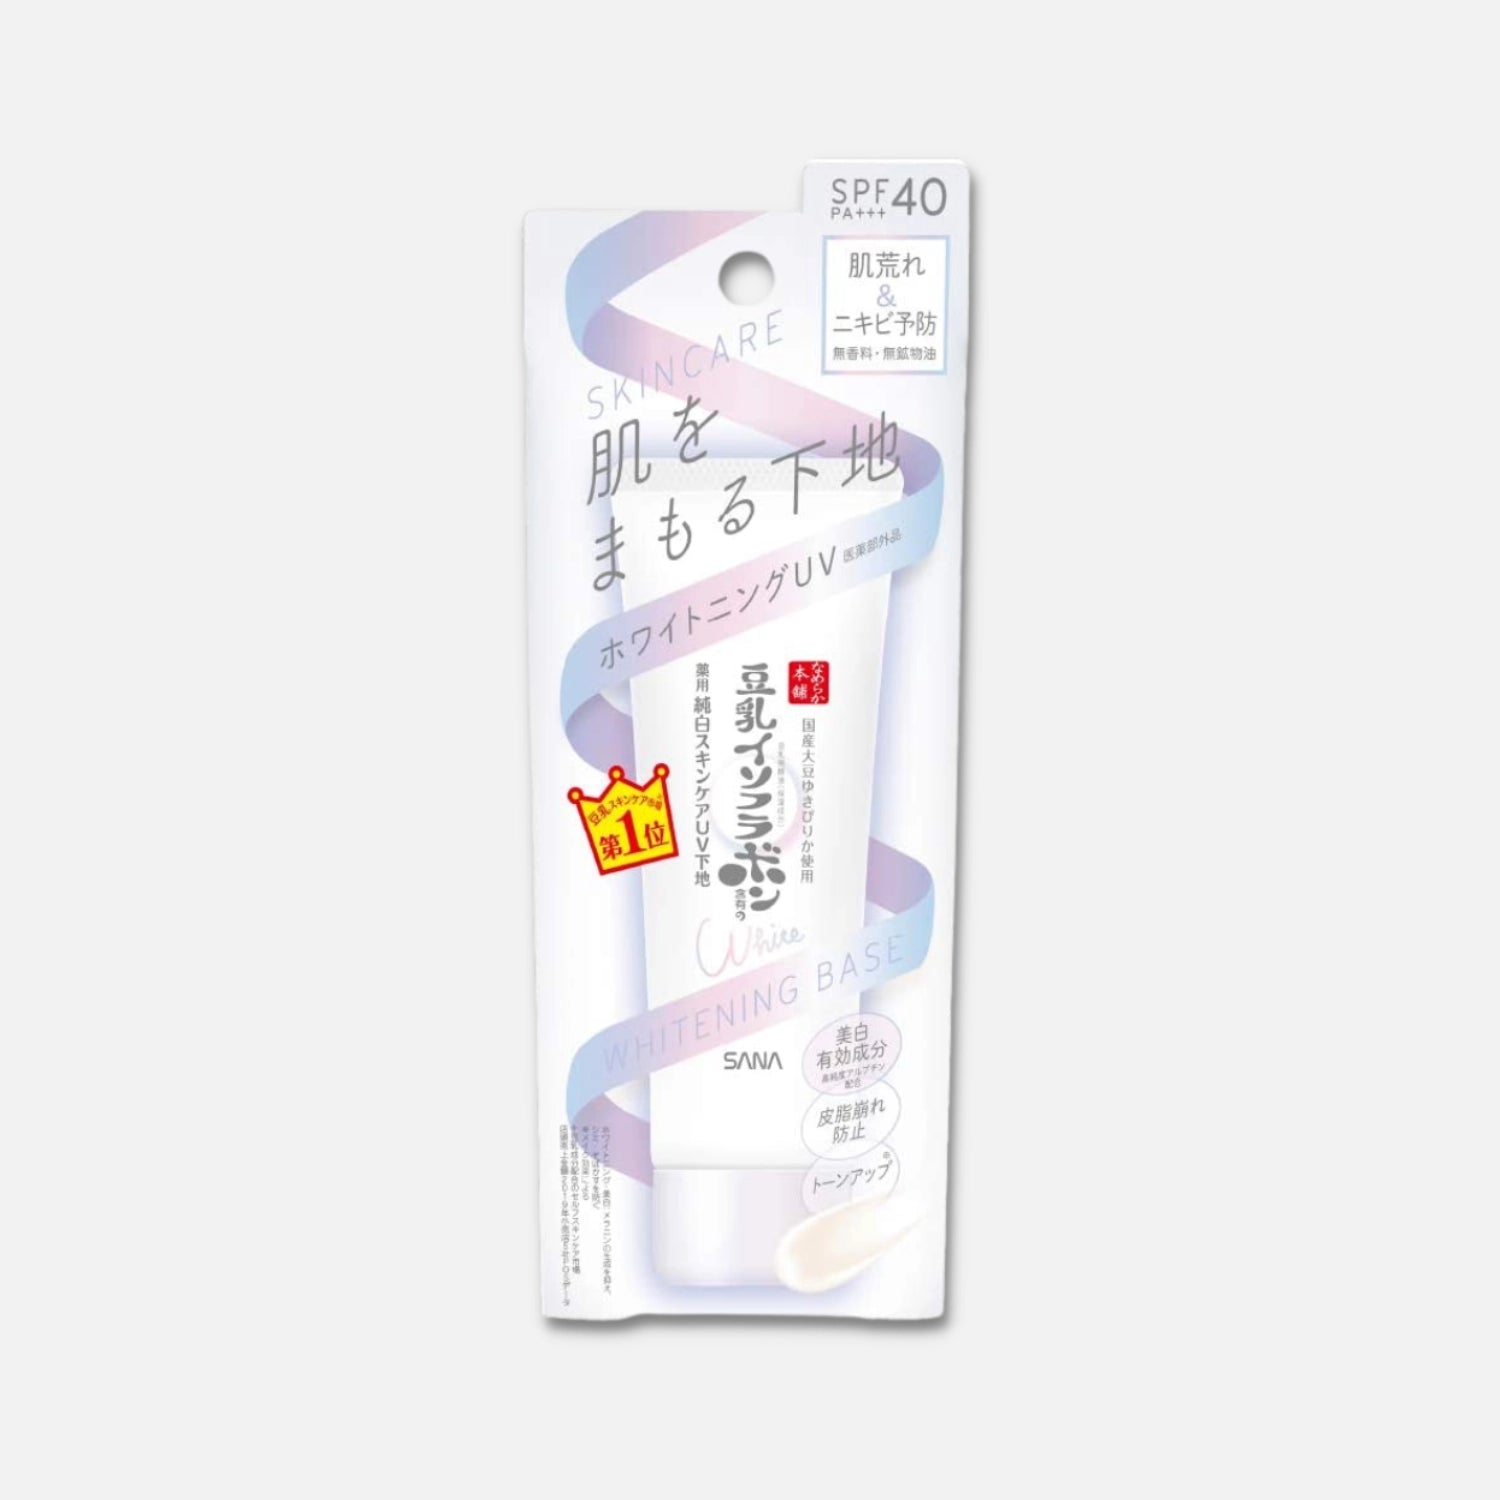 Sana Soy Isoflavones Whitening & Acne Care Sunscreen SPF 40 PA++++ 50g - Buy Me Japan